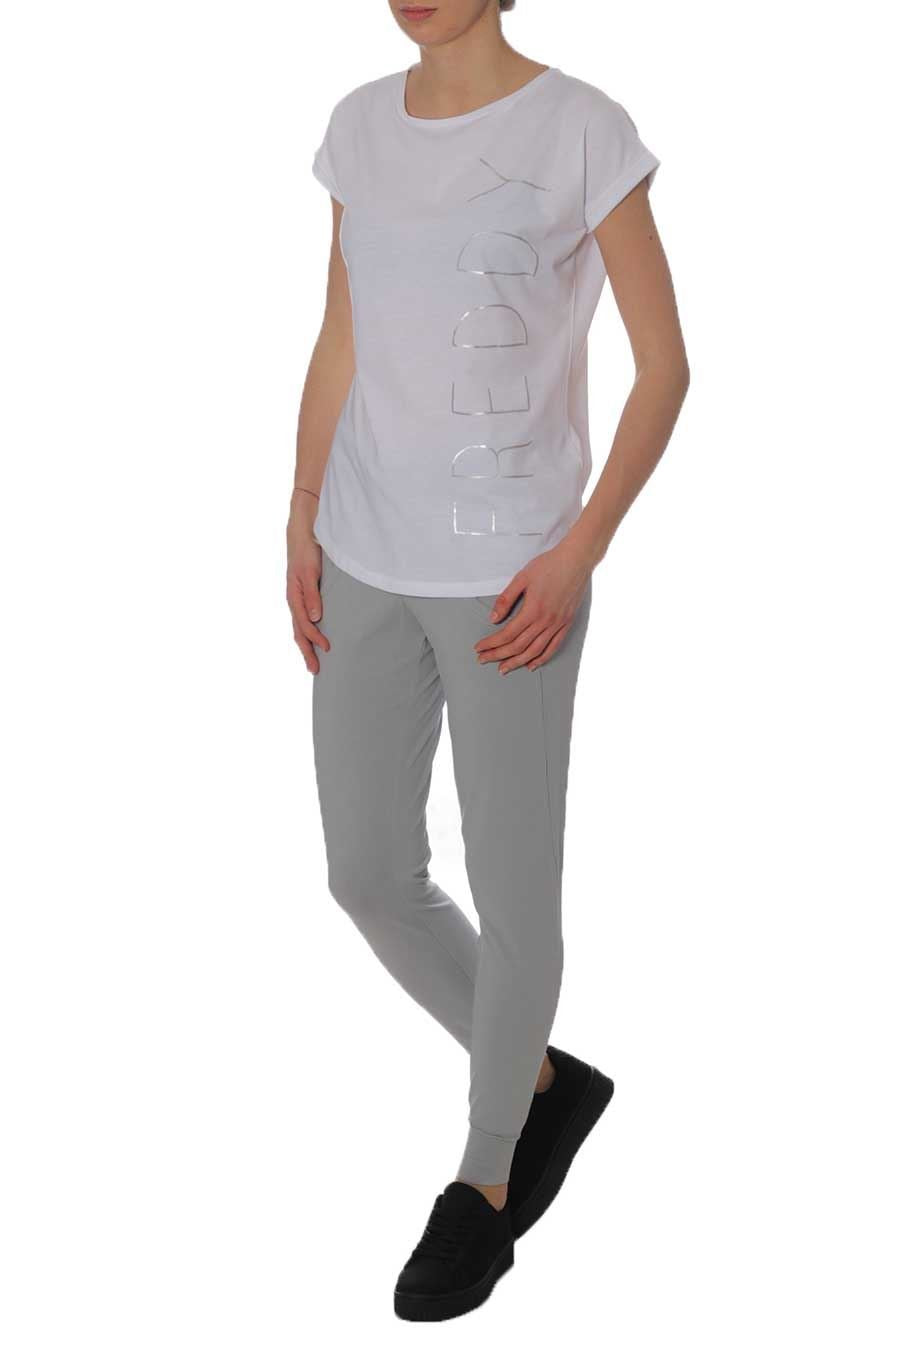 Pantalone + T-shirt Donna Freddy SAVEDTS G51W Grigio Bianco, M MainApps